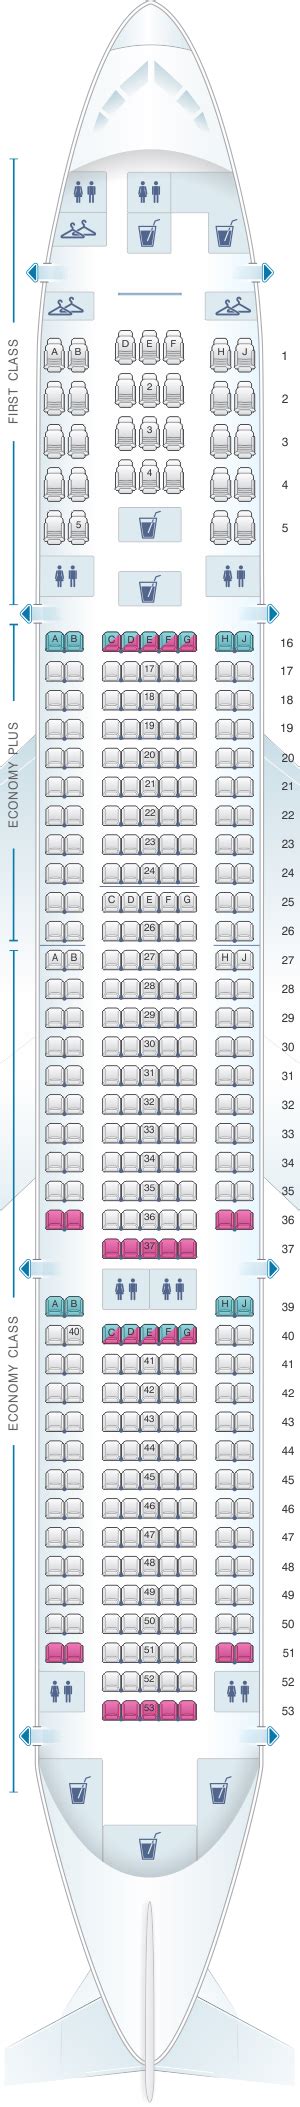 Seat Map United Airlines Boeing B777 200 777 Version 4 Seatmaestro